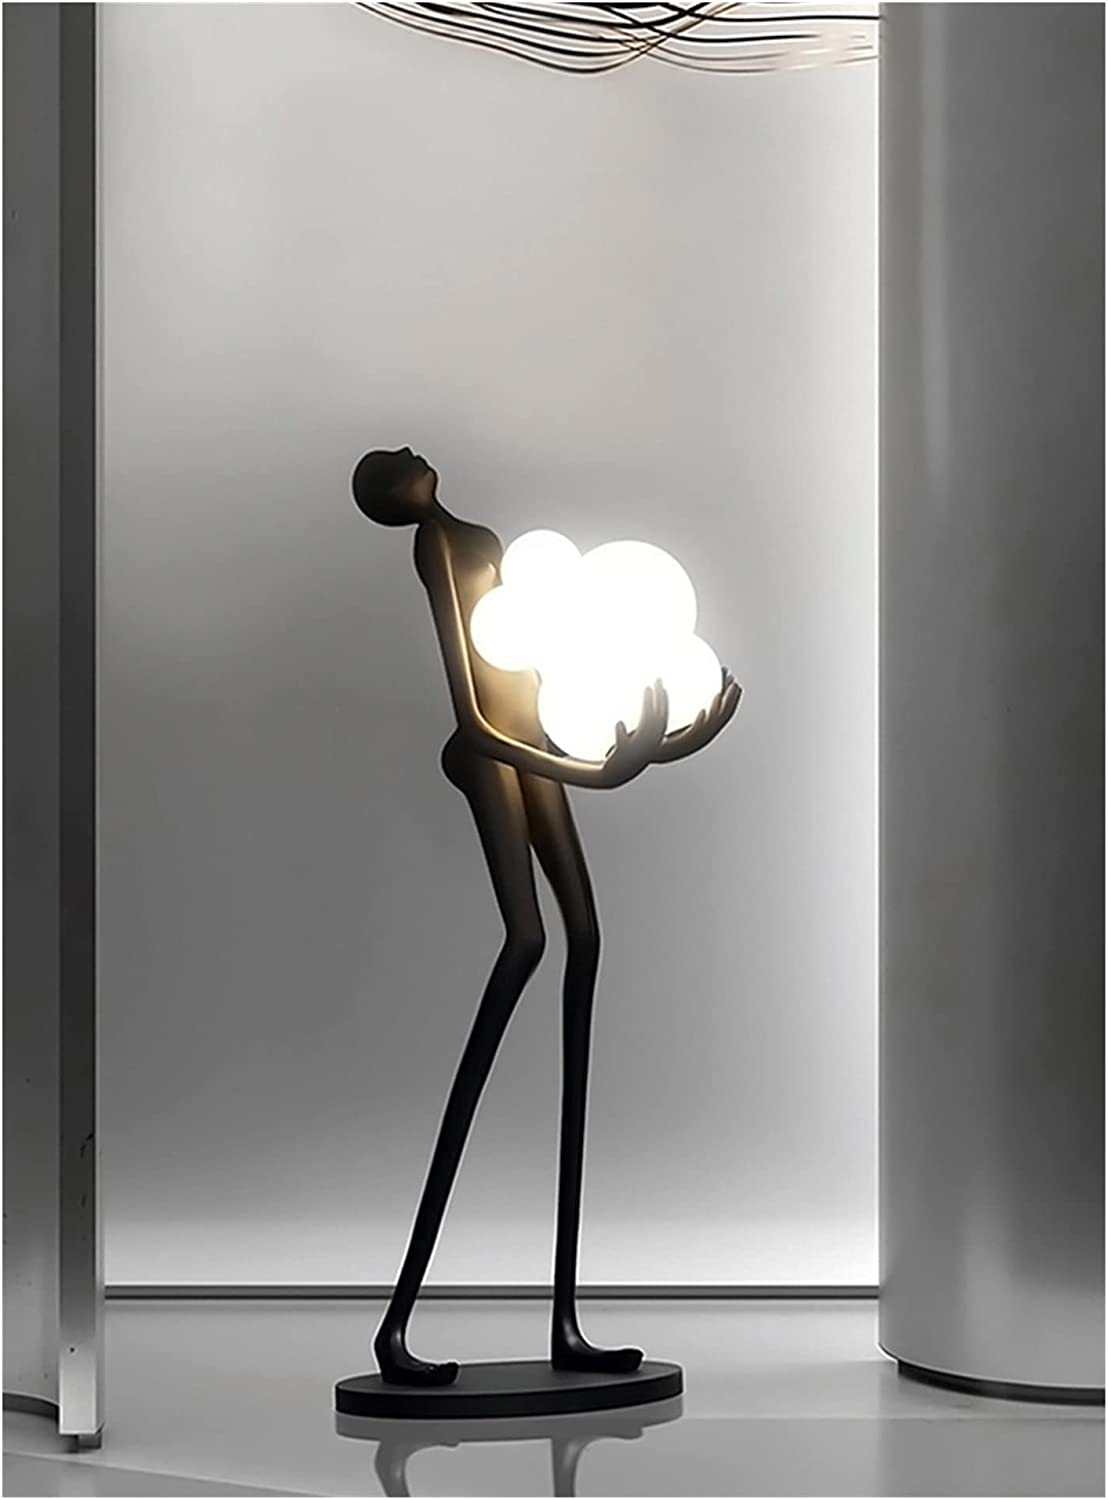 BLACK LADY STATUE HOLDING LIGHT GLOBES FLOOR  LAMP